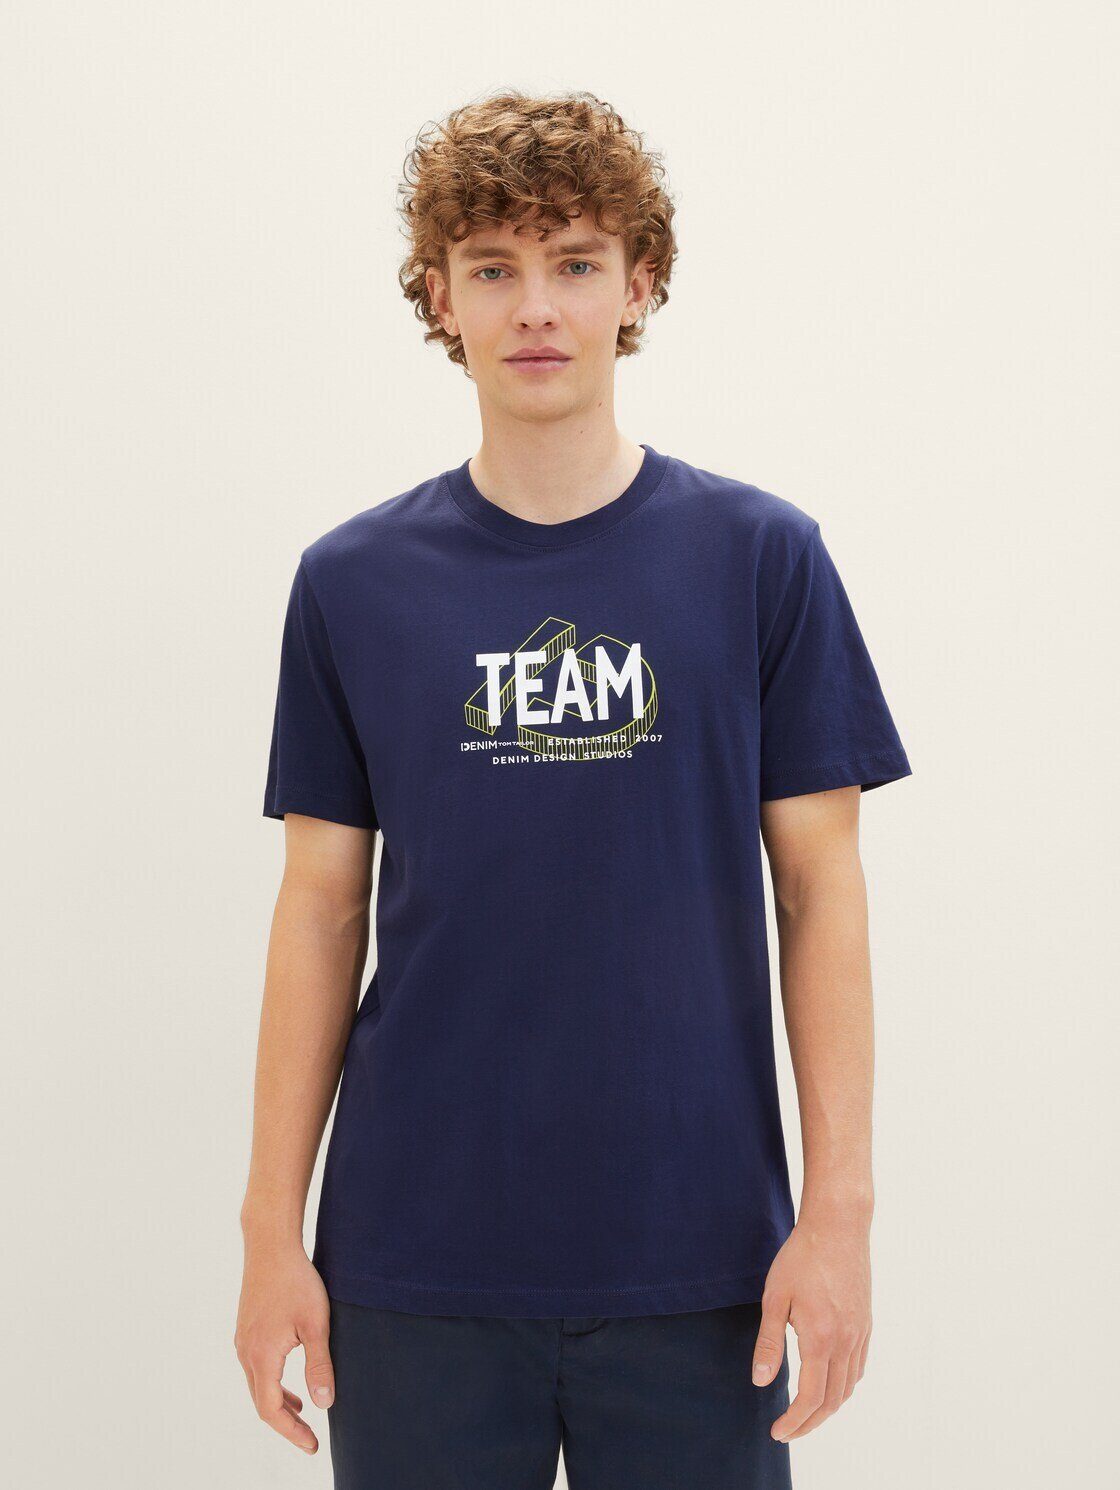 T-Shirt T-Shirt Denim TOM dark blueberry Print TAILOR mit